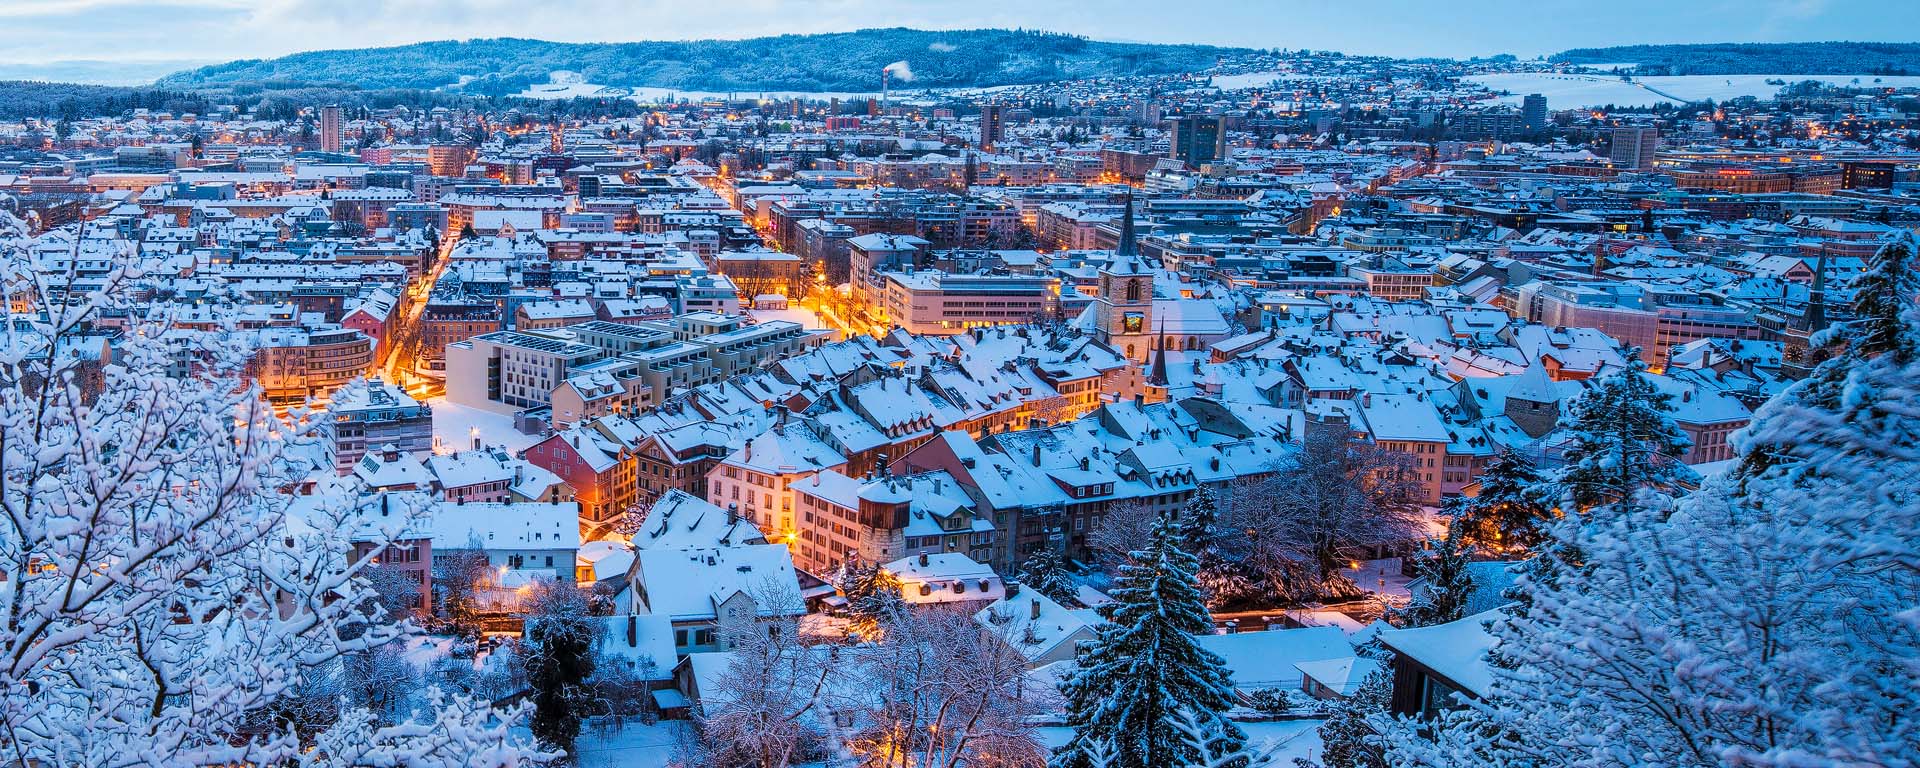 Winter in Biel/Bienne mit Altstadt